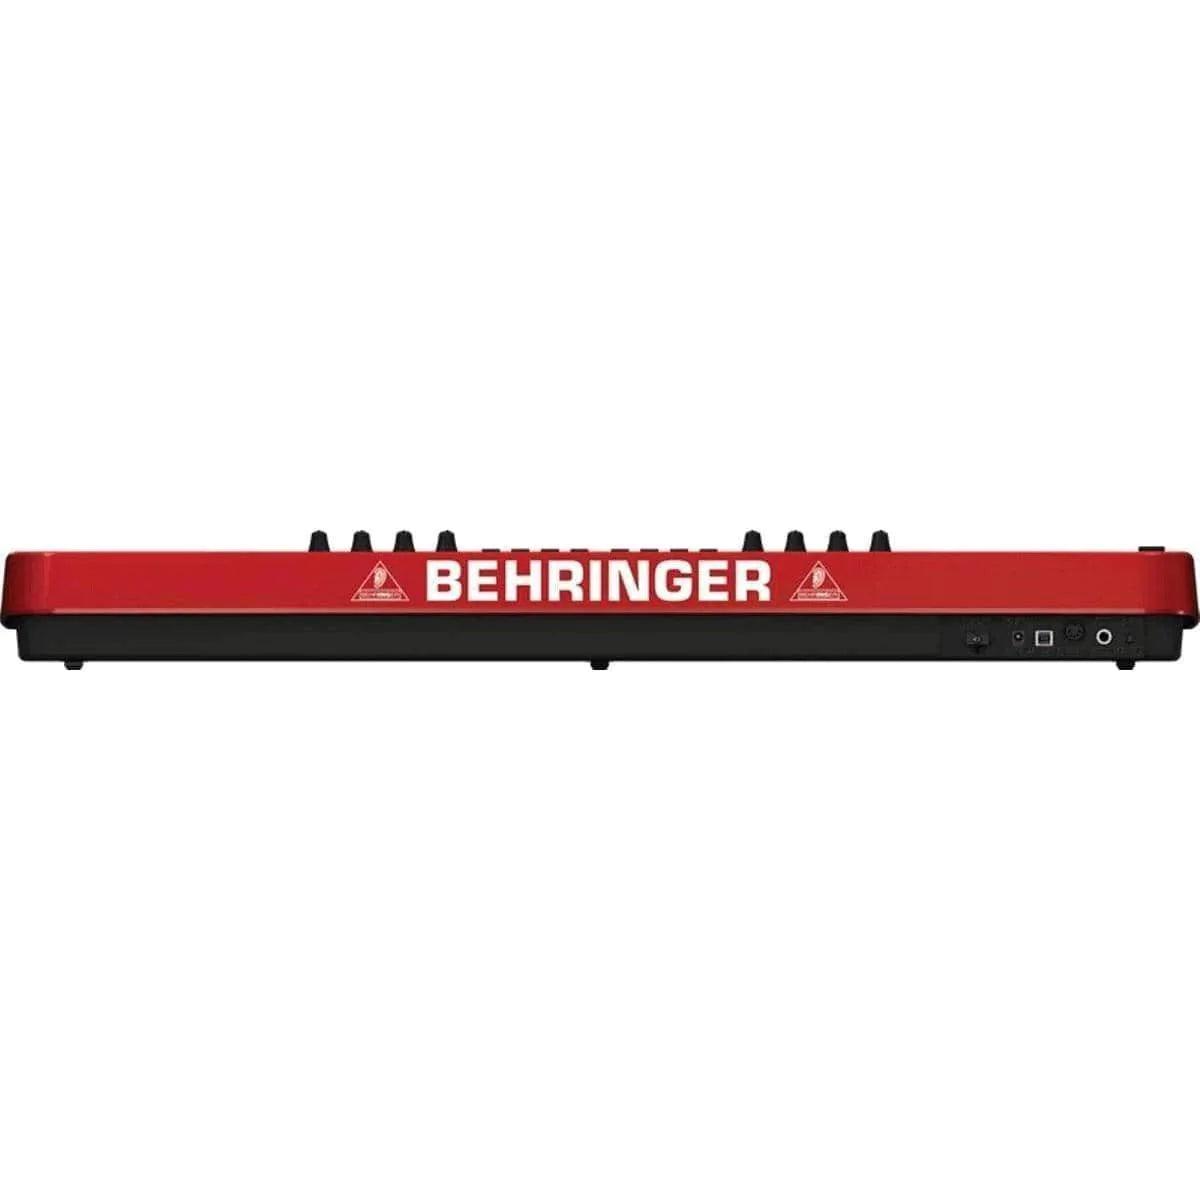 Behringer UMX490 MIDI Keyboard 49-Key Controller